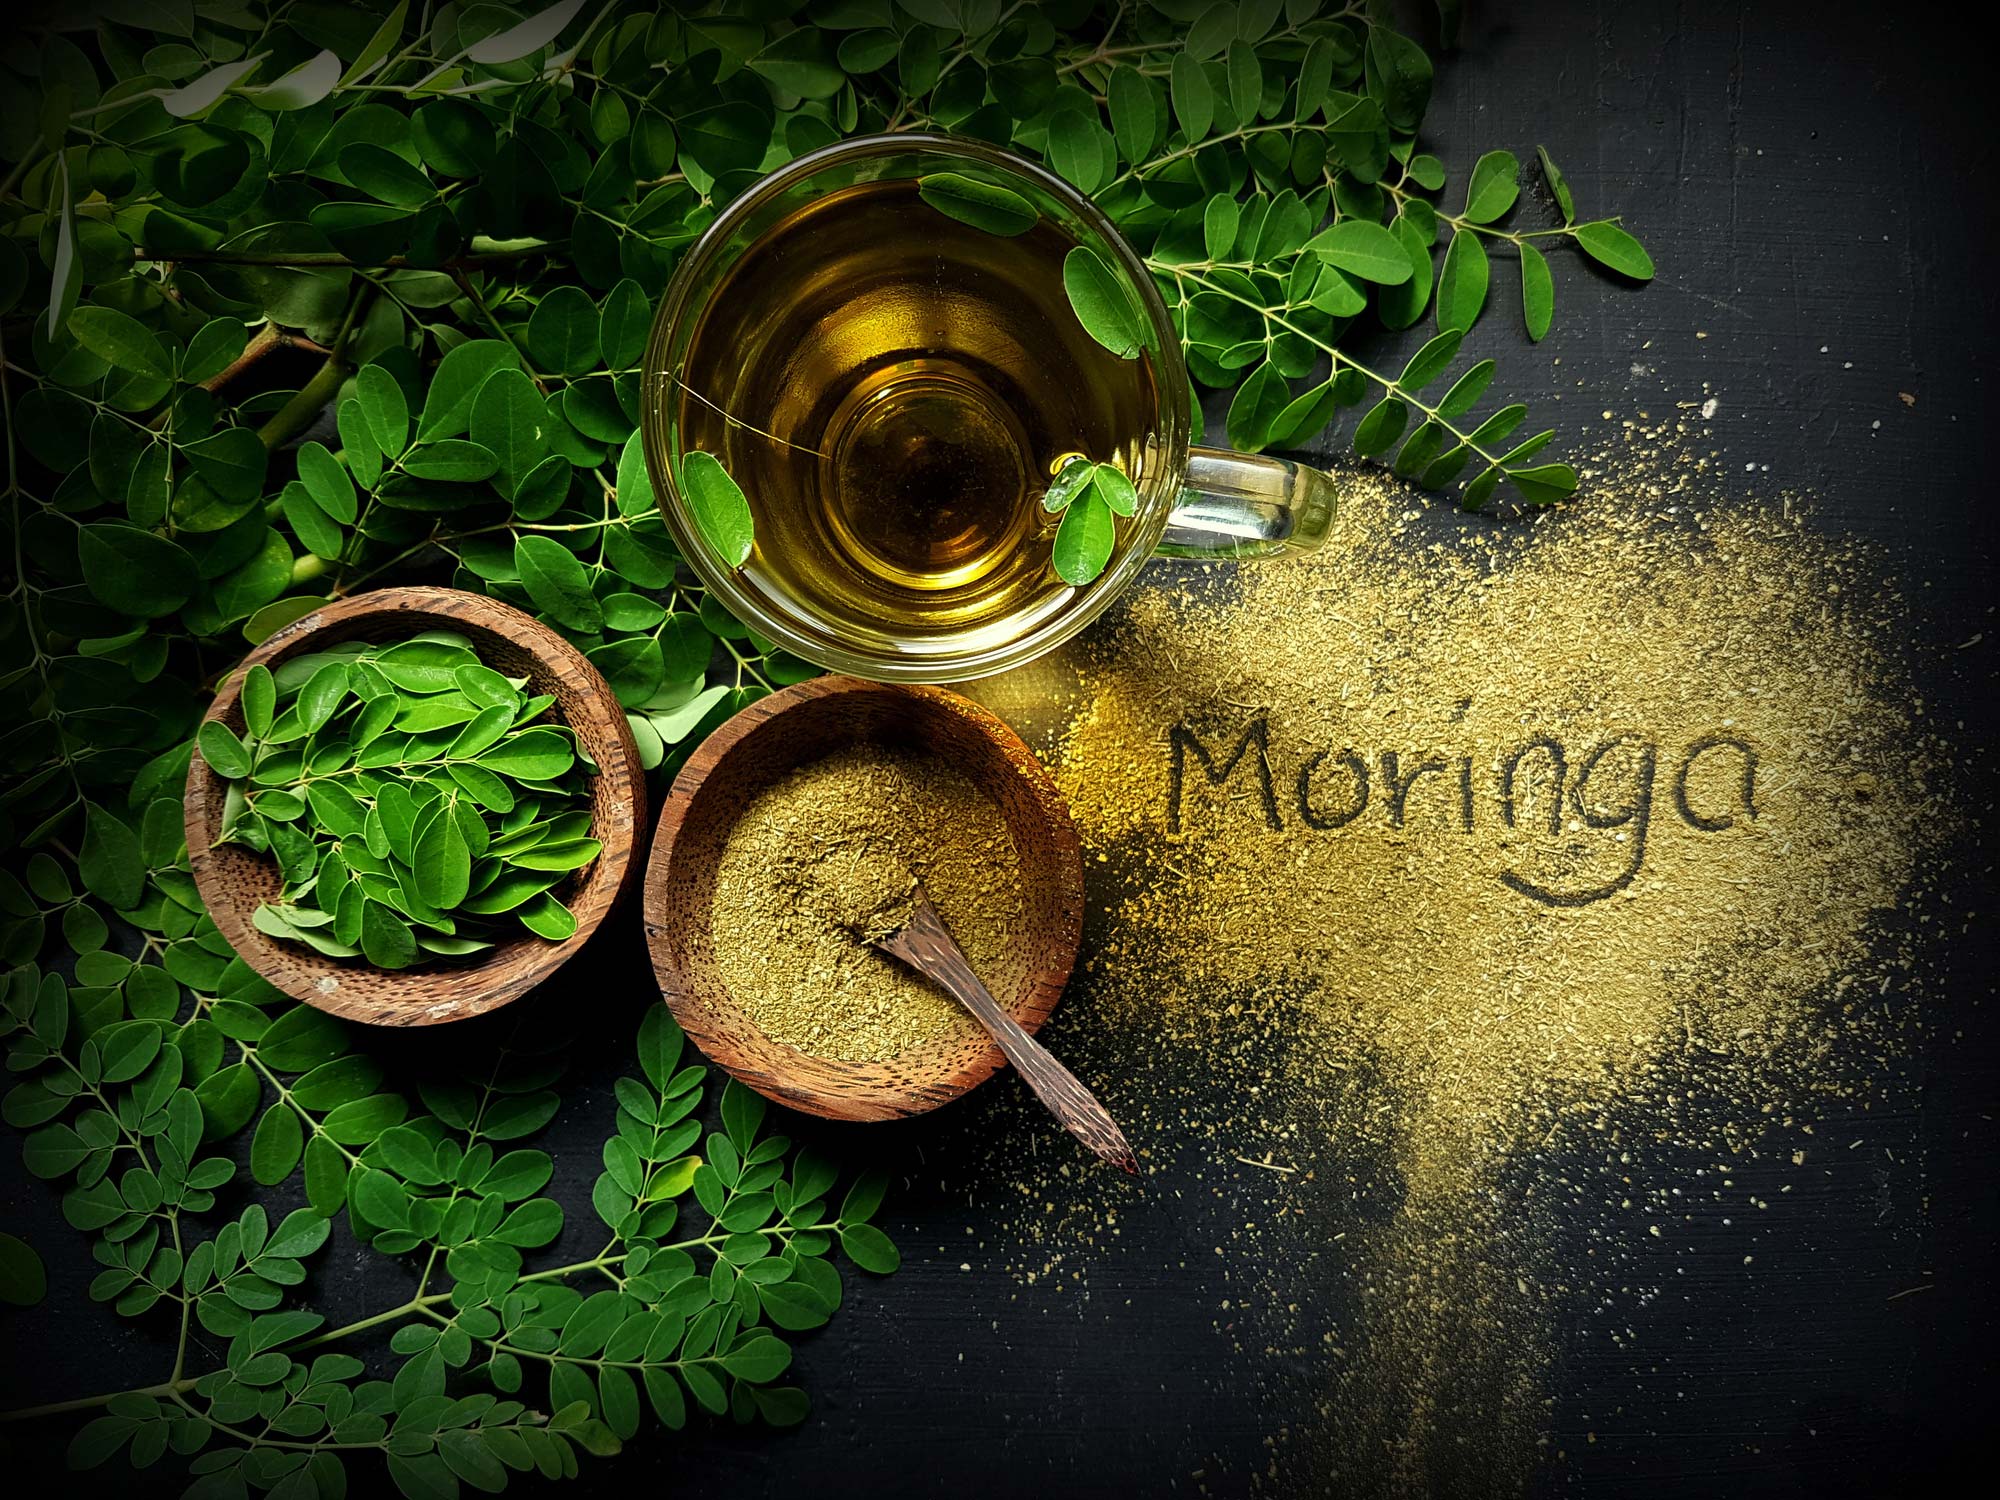 what benefits does moringa tea have